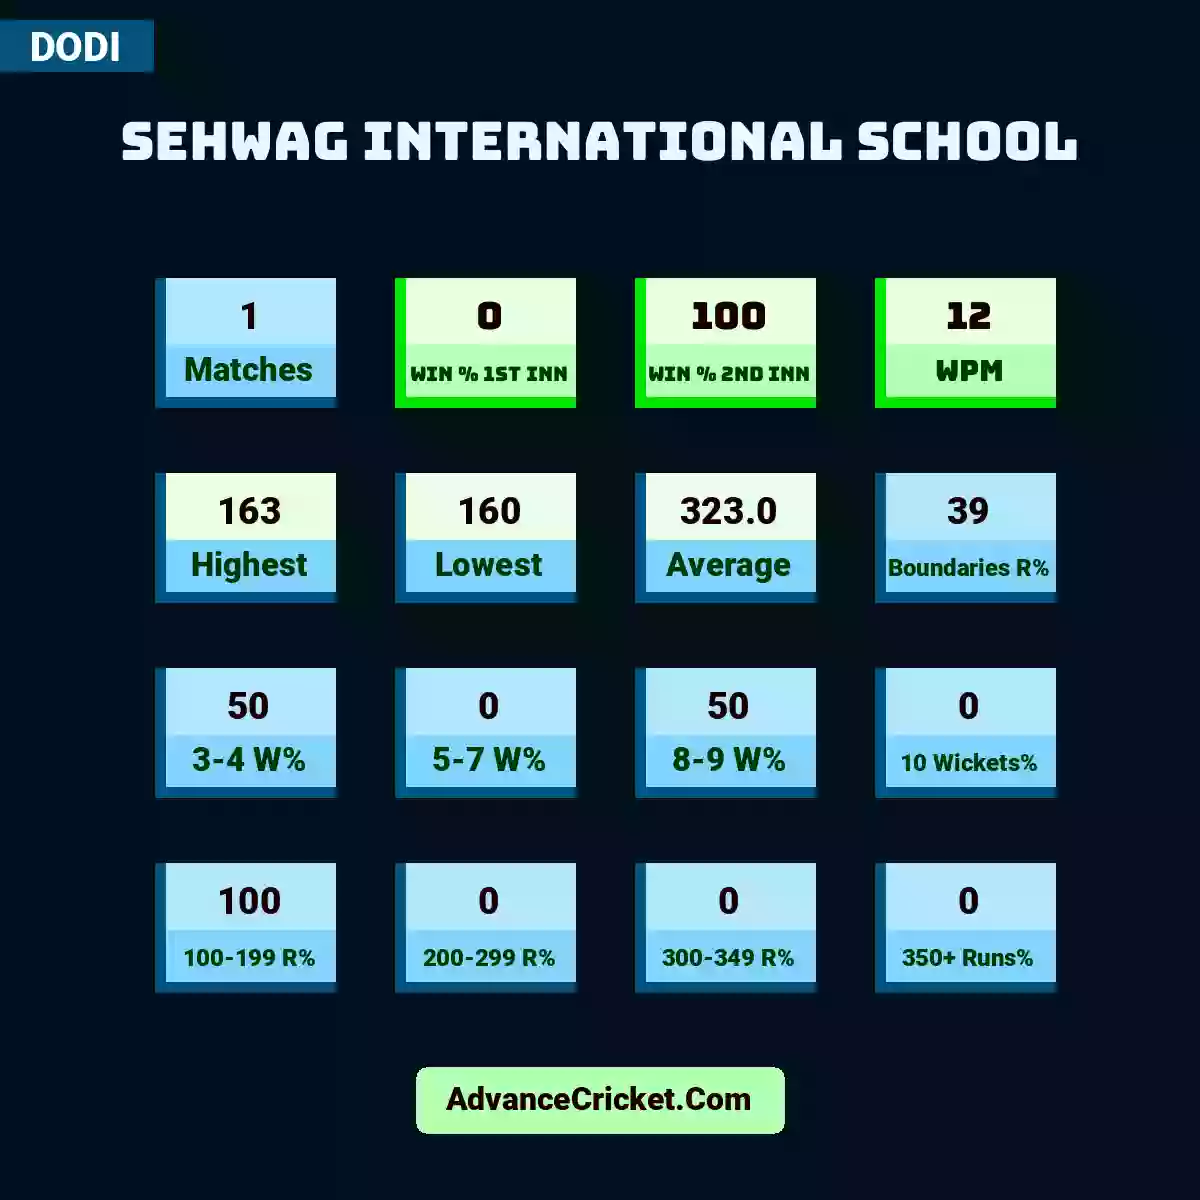 Image showing Sehwag International School with Matches: 1, Win % 1st Inn: 0, Win % 2nd Inn: 100, WPM: 12, Highest: 163, Lowest: 160, Average: 323.0, Boundaries R%: 39, 3-4 W%: 50, 5-7 W%: 0, 8-9 W%: 50, 10 Wickets%: 0, 100-199 R%: 100, 200-299 R%: 0, 300-349 R%: 0, 350+ Runs%: 0.